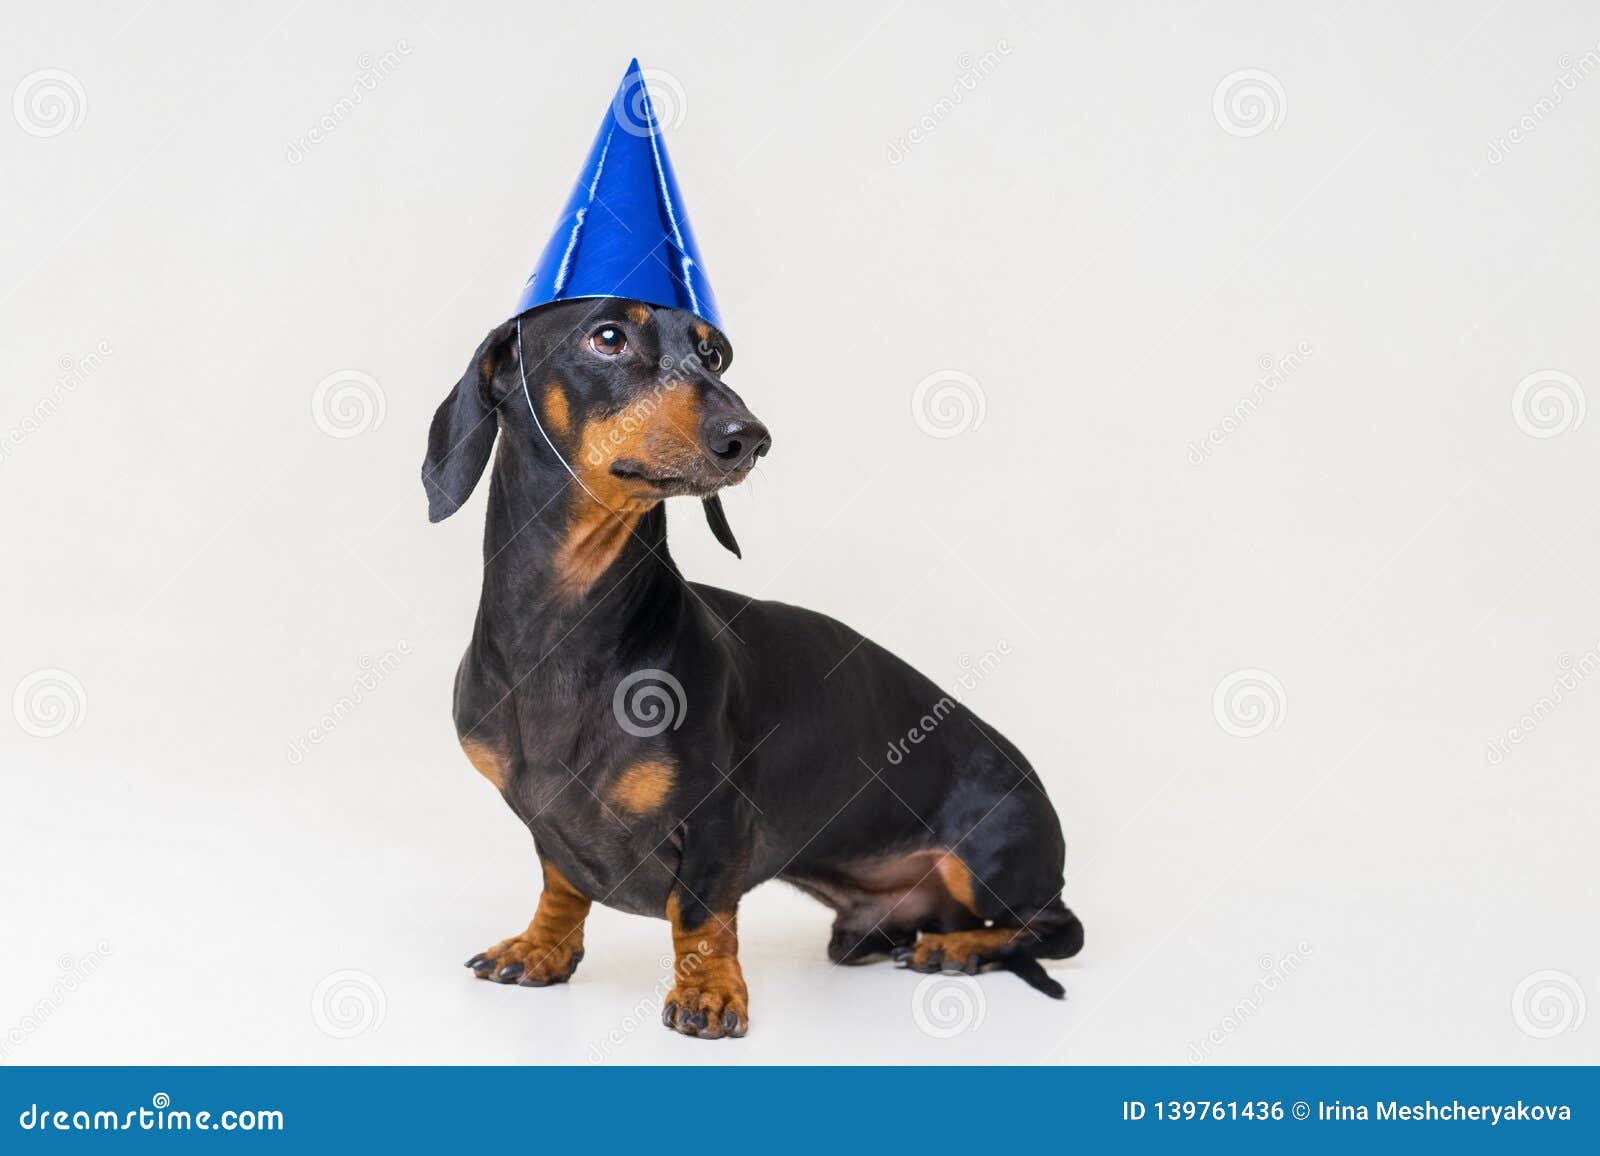 birthday wiener dog